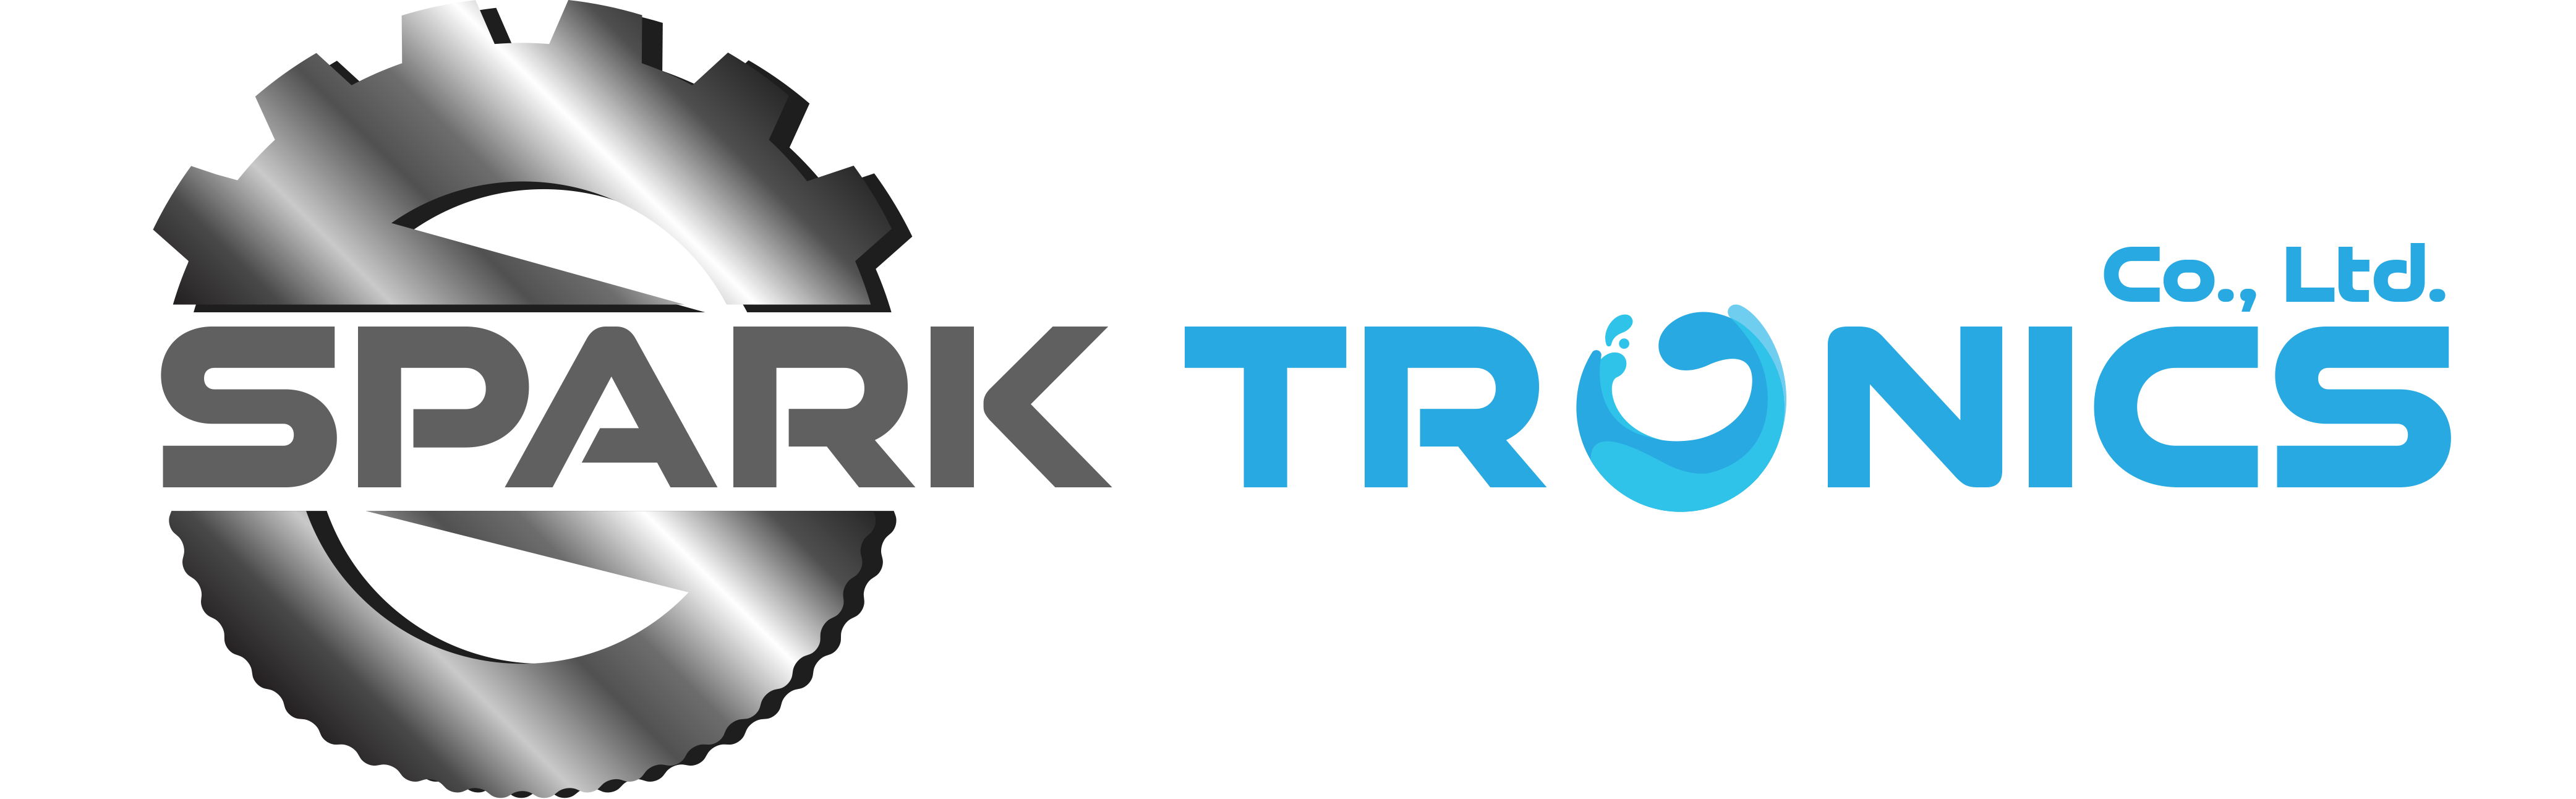 SPARK TRONICS CO.,LTD., บริษัท สปาร์ค โทรนิกส์ จำกัด